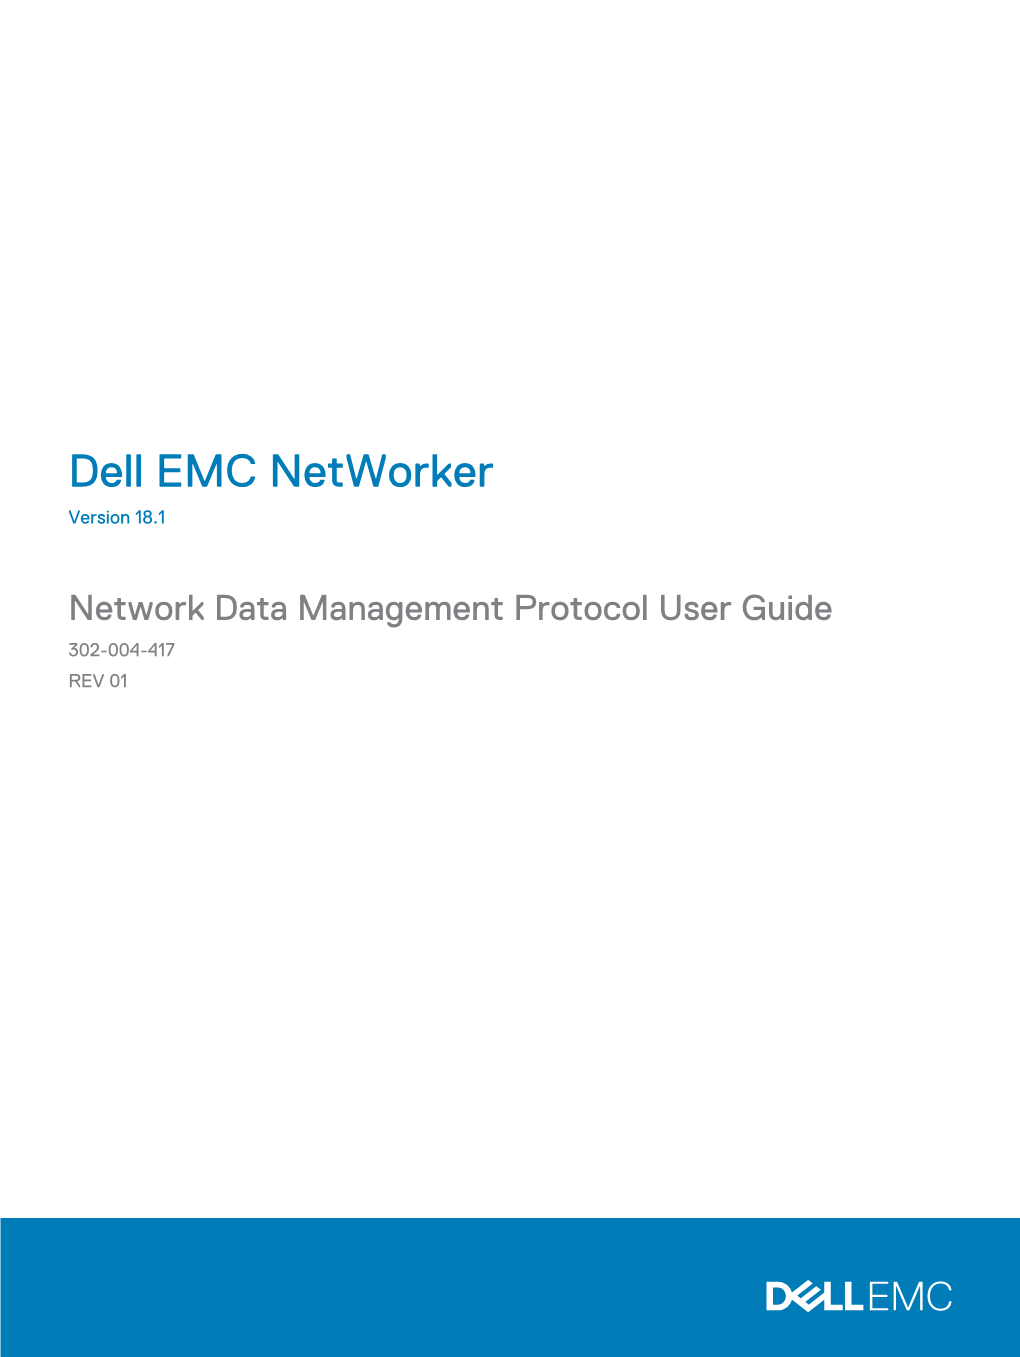 Network Data Management Protocol User Guide 302-004-417 REV 01 Copyright © 2015-2018 Dell Inc